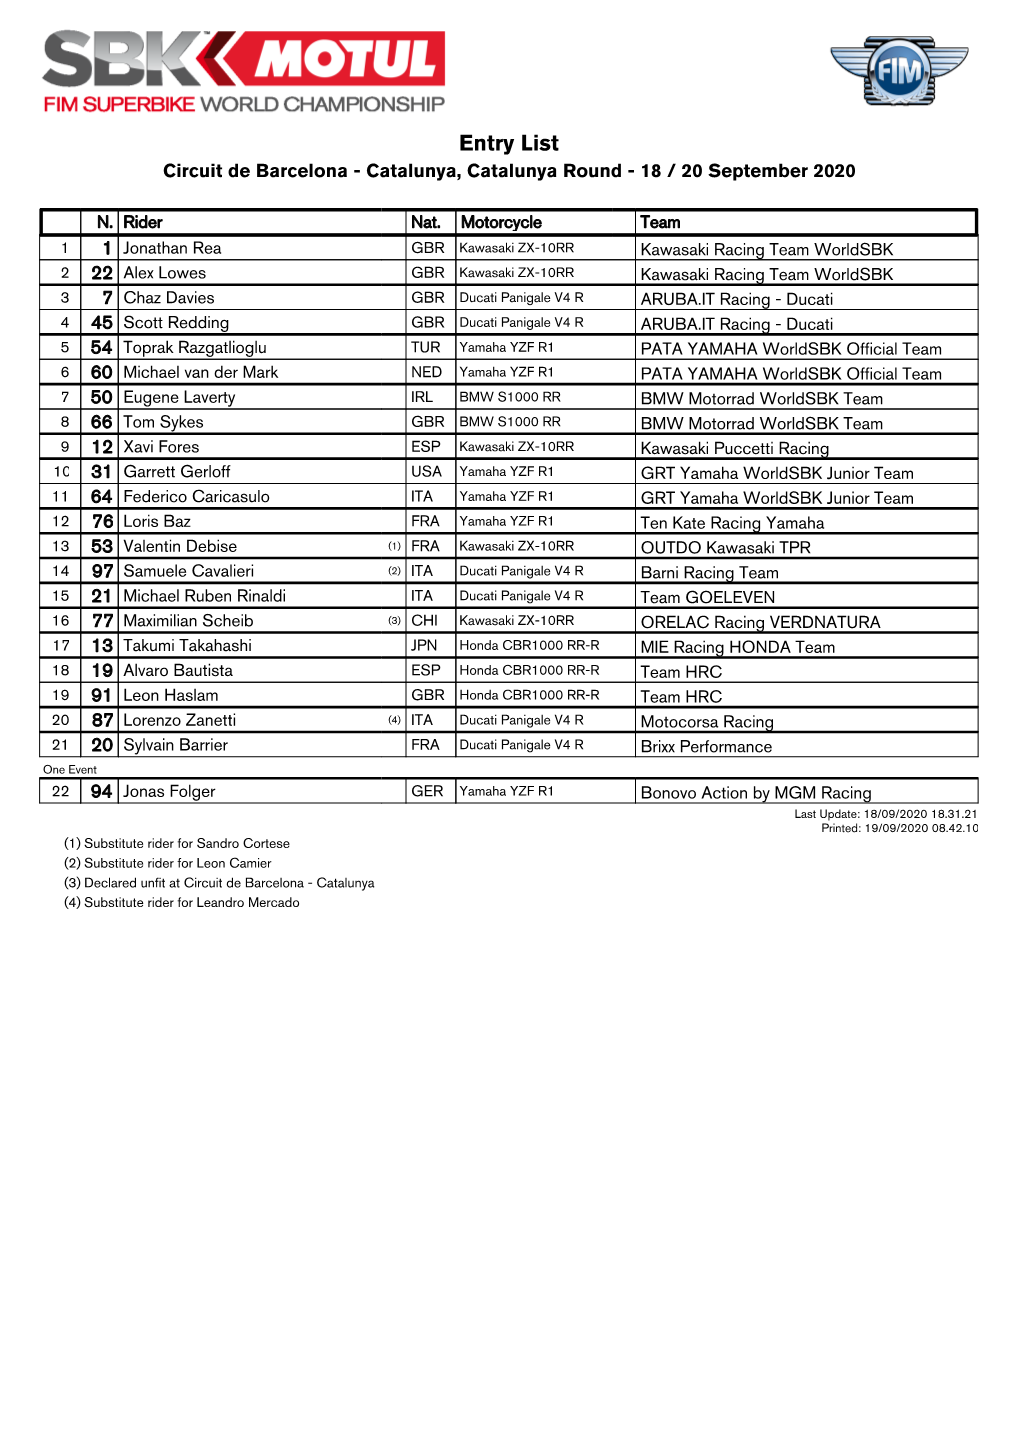 Entry List Circuit De Barcelona - Catalunya, Catalunya Round - 18 / 20 September 2020